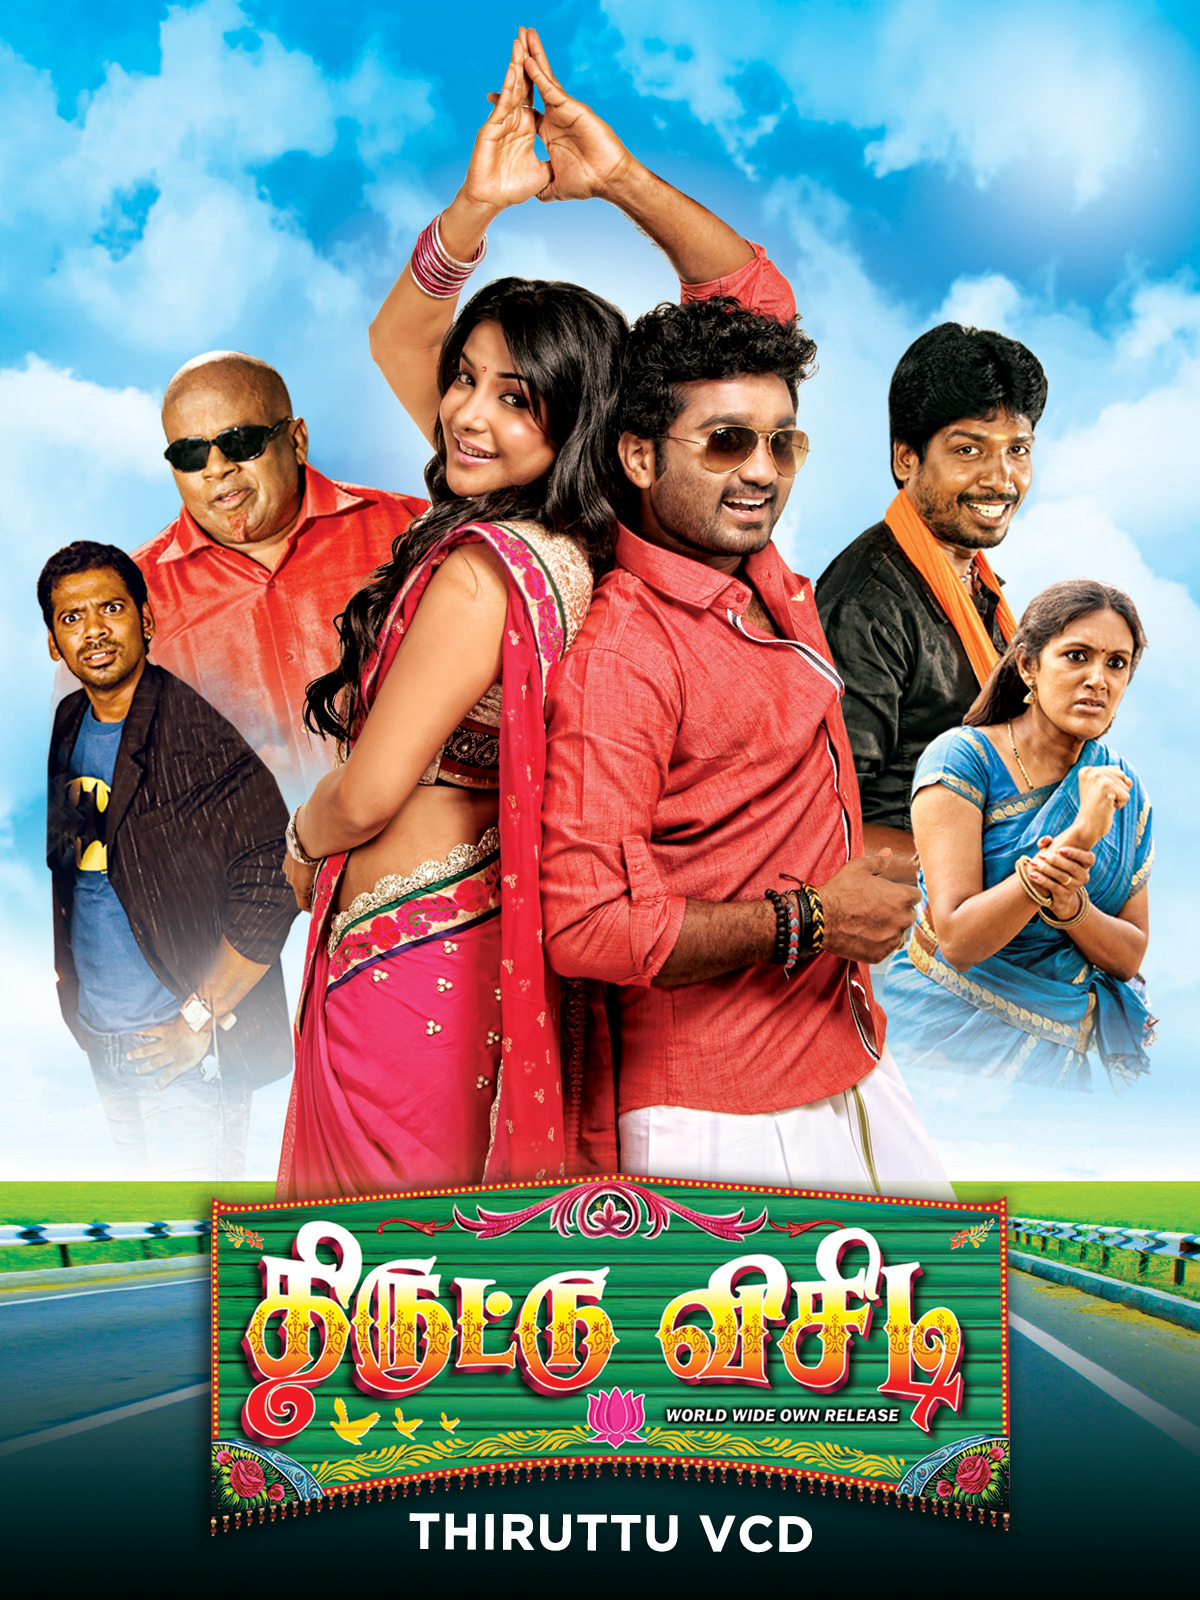 dallas nicholson recommends thiruttu vcd tamil new movies pic